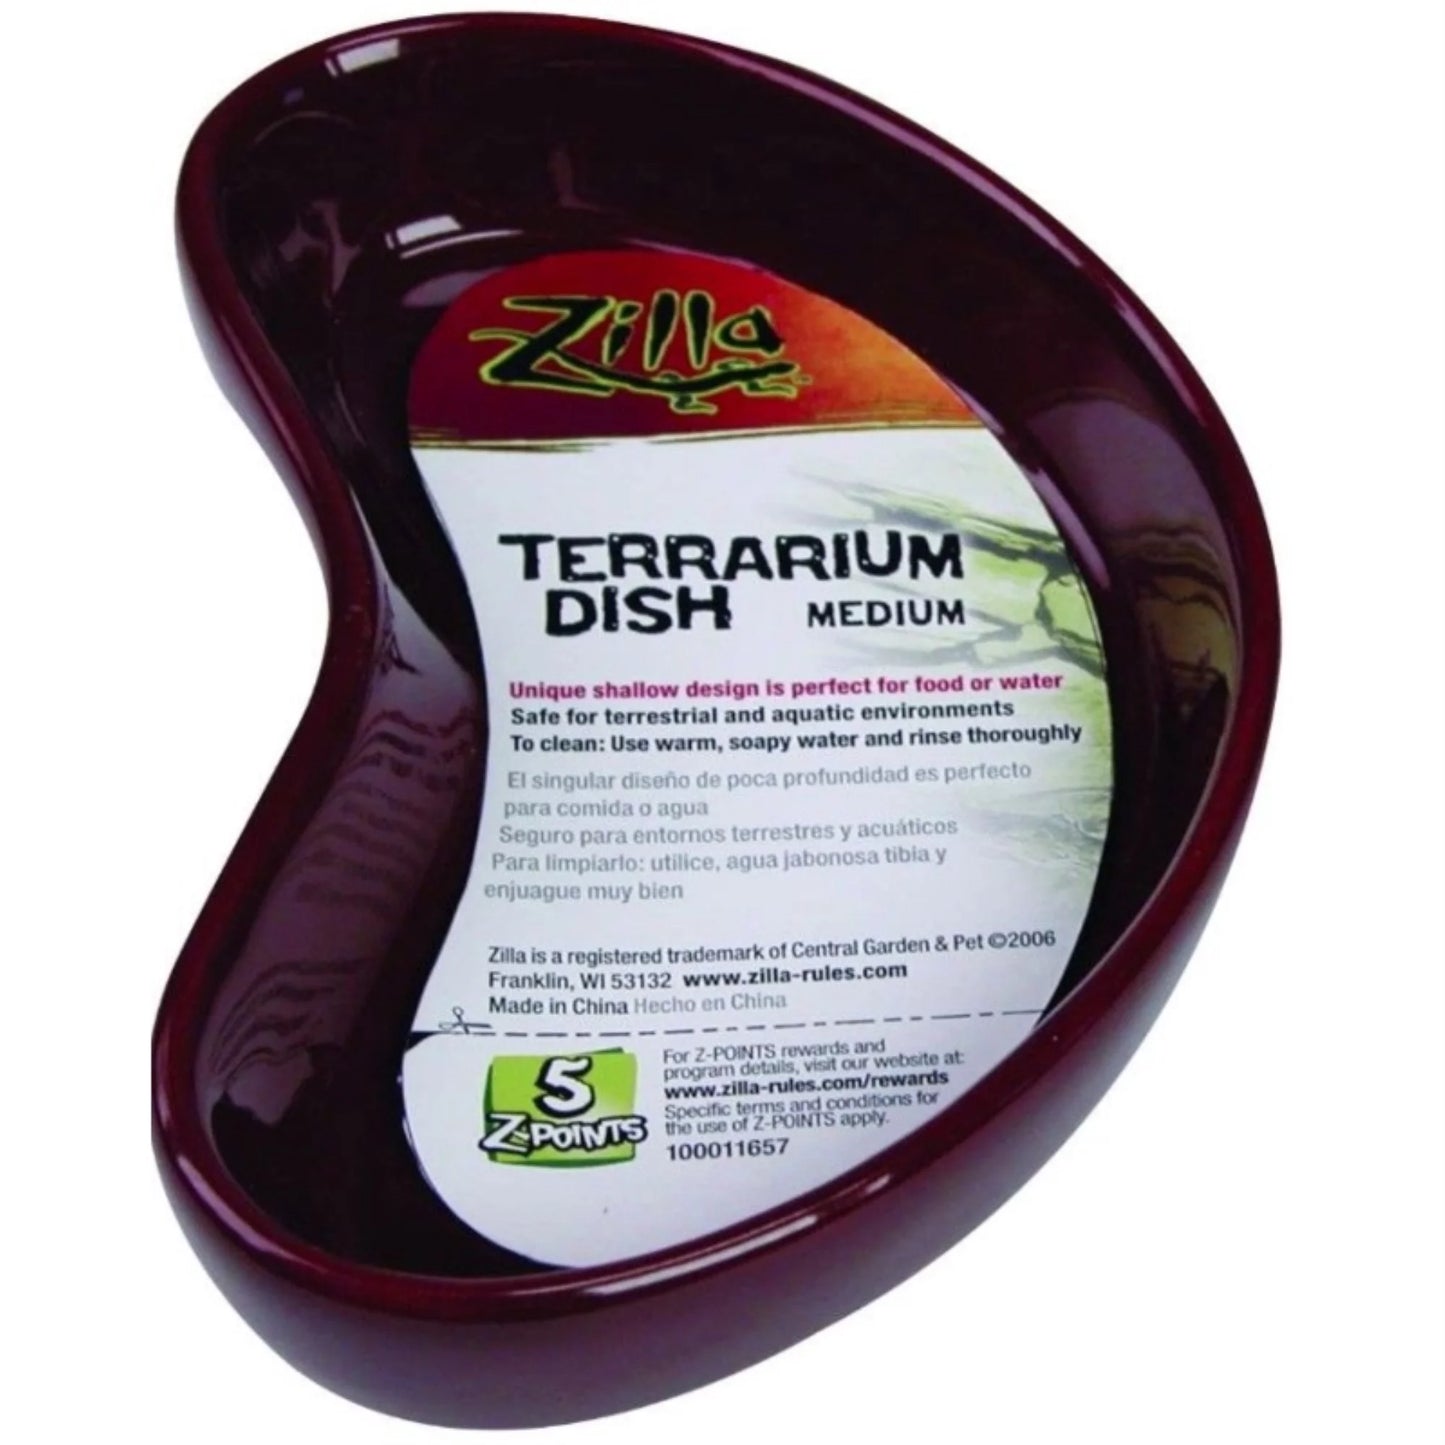 Zillo Med. Terrarium Dish